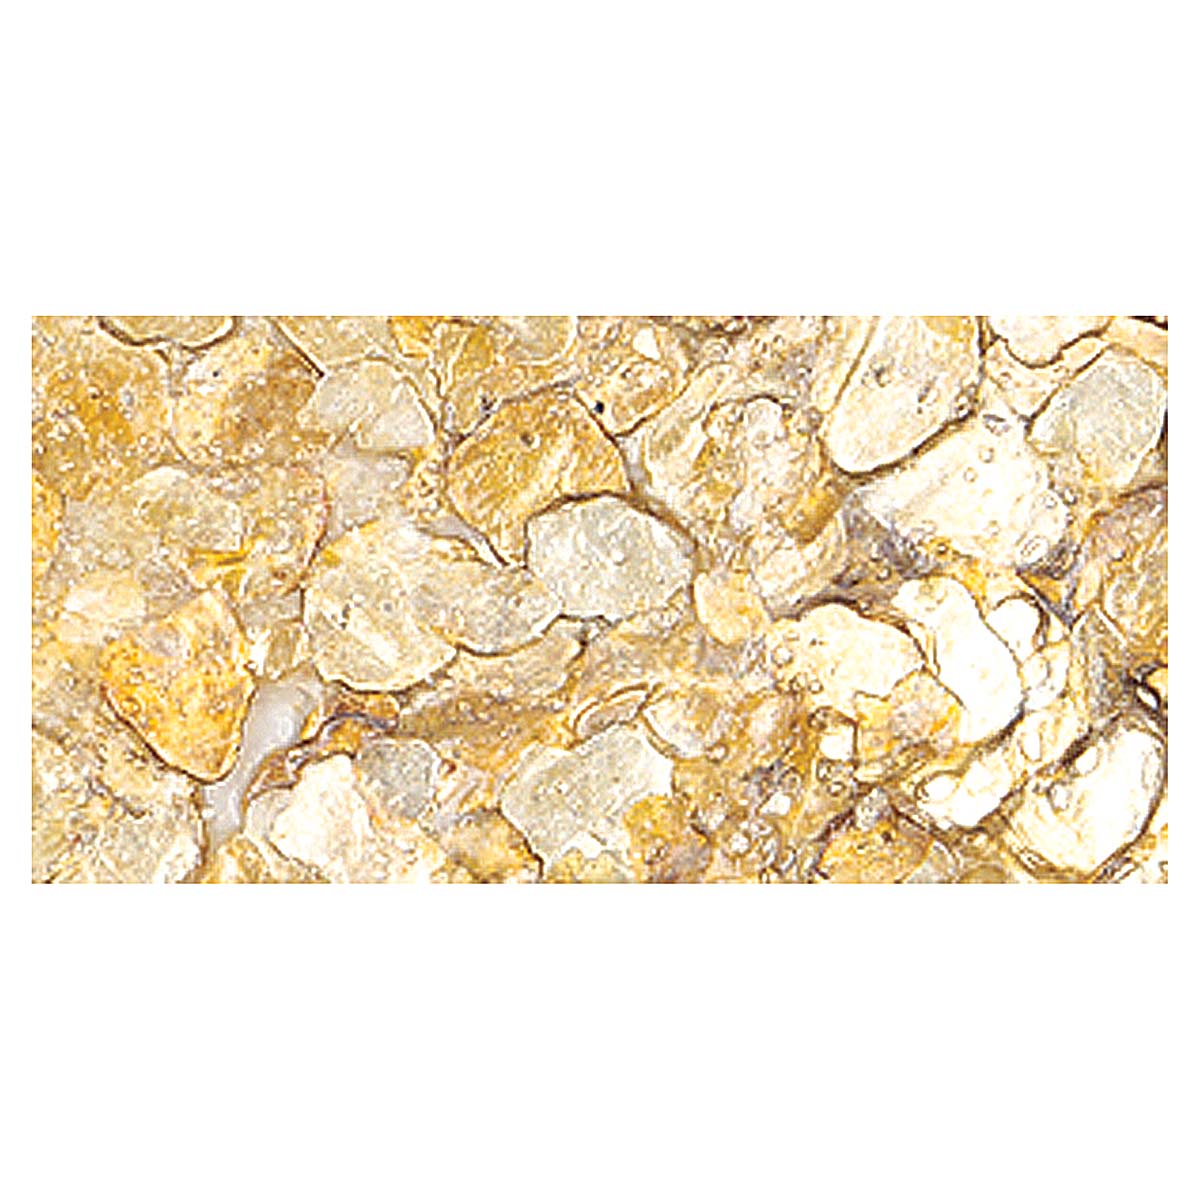 Golden Acrylic 4oz Gold Mica Flake (Large)